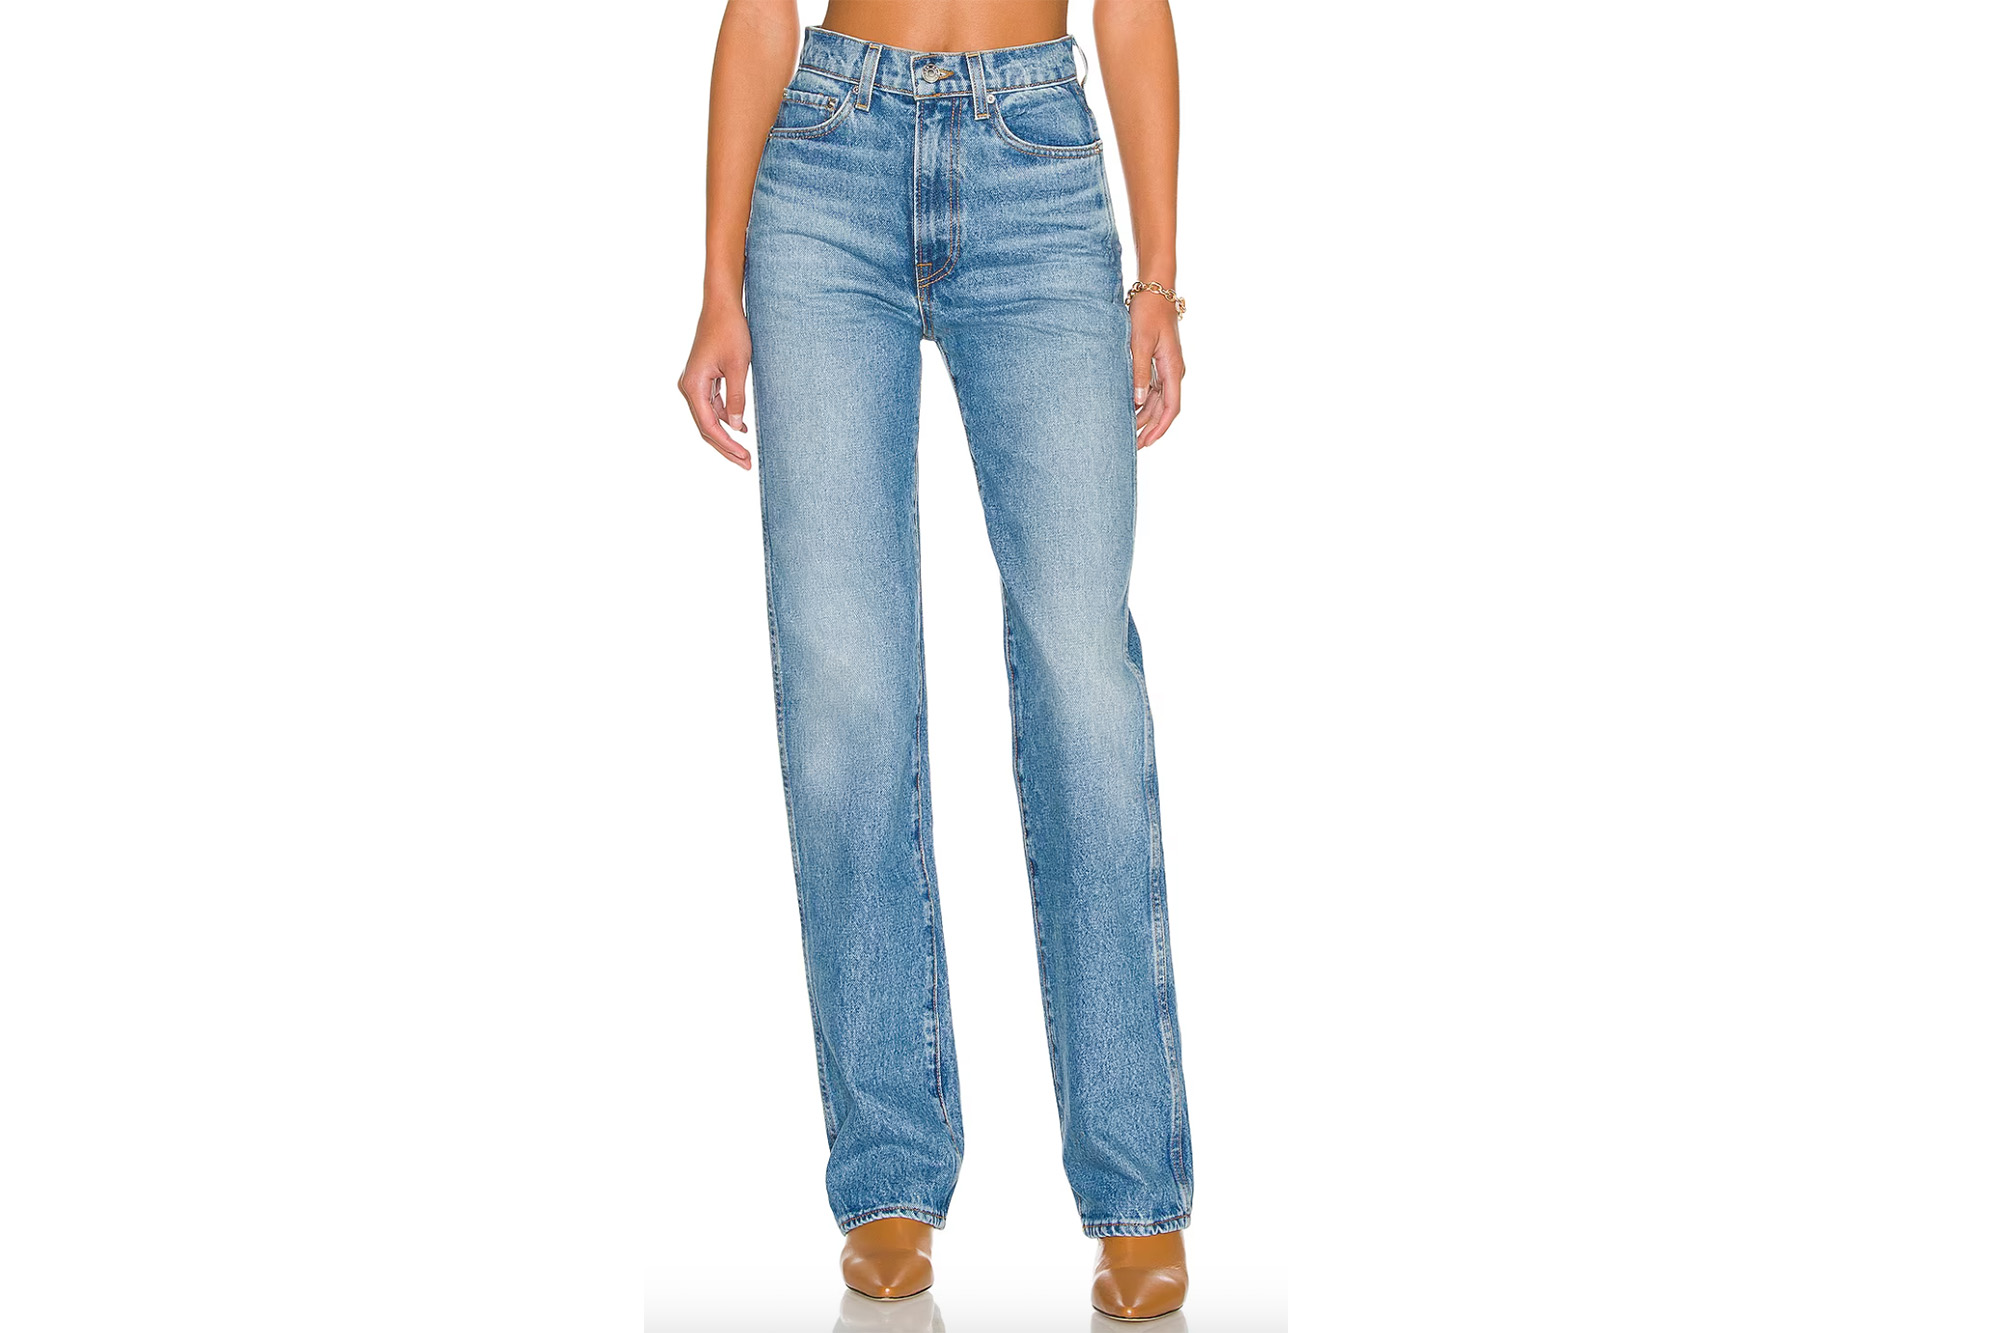 A model in blue jeans